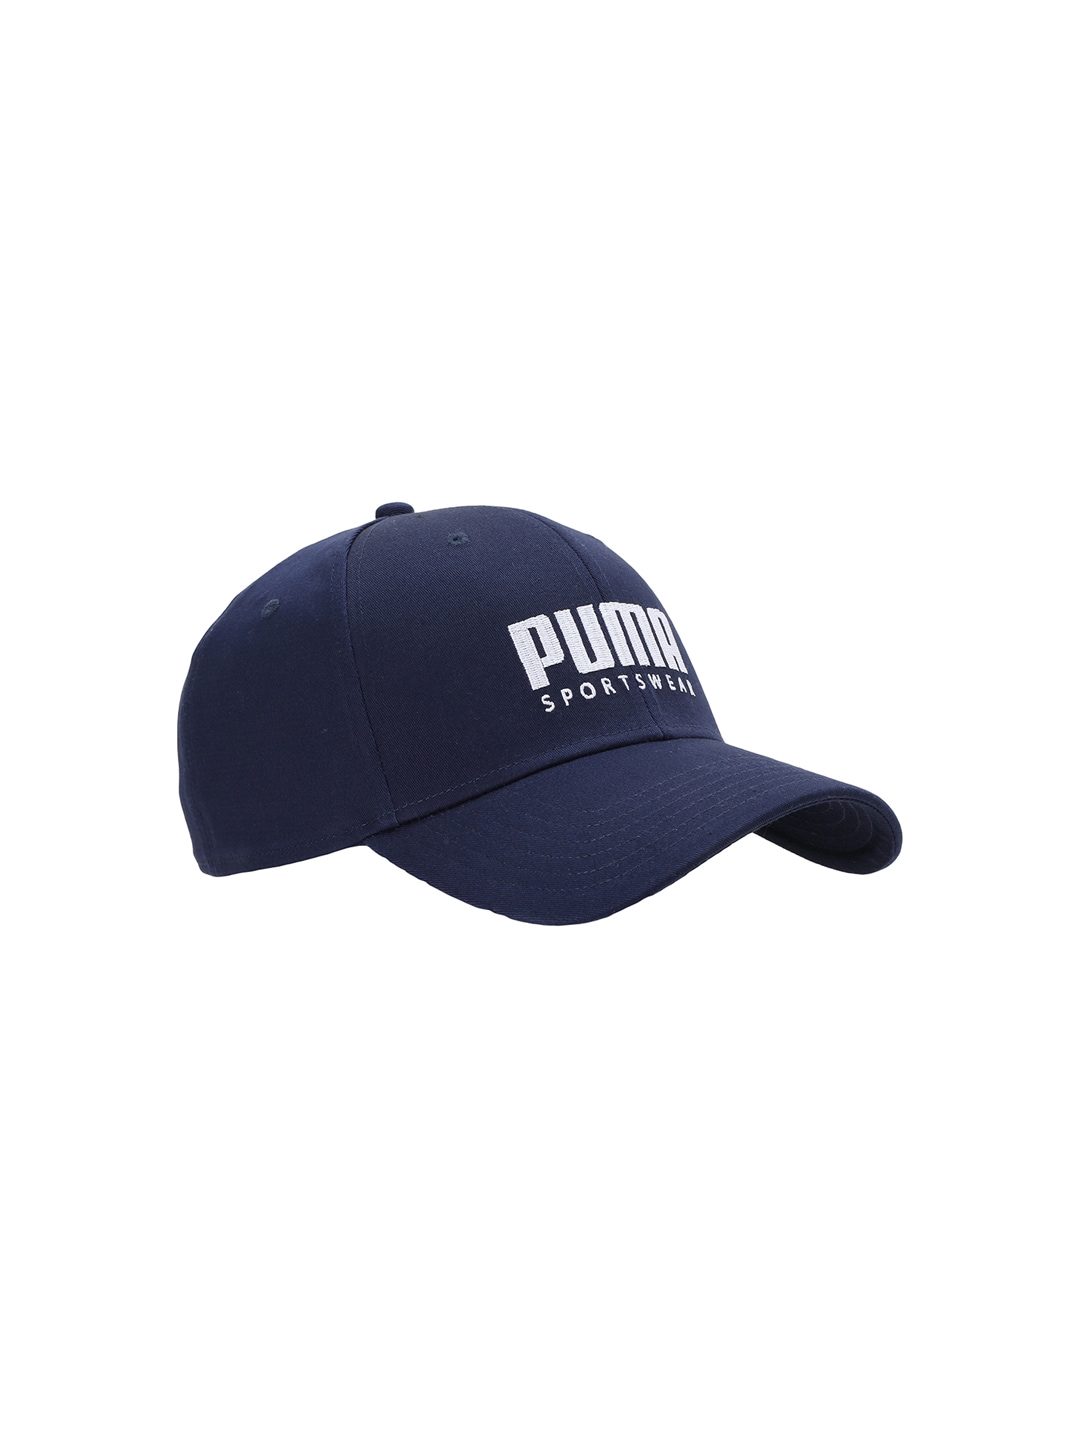 Puma Unisex Navy Blue Solid Stretchfit Baseball Cap Price in India